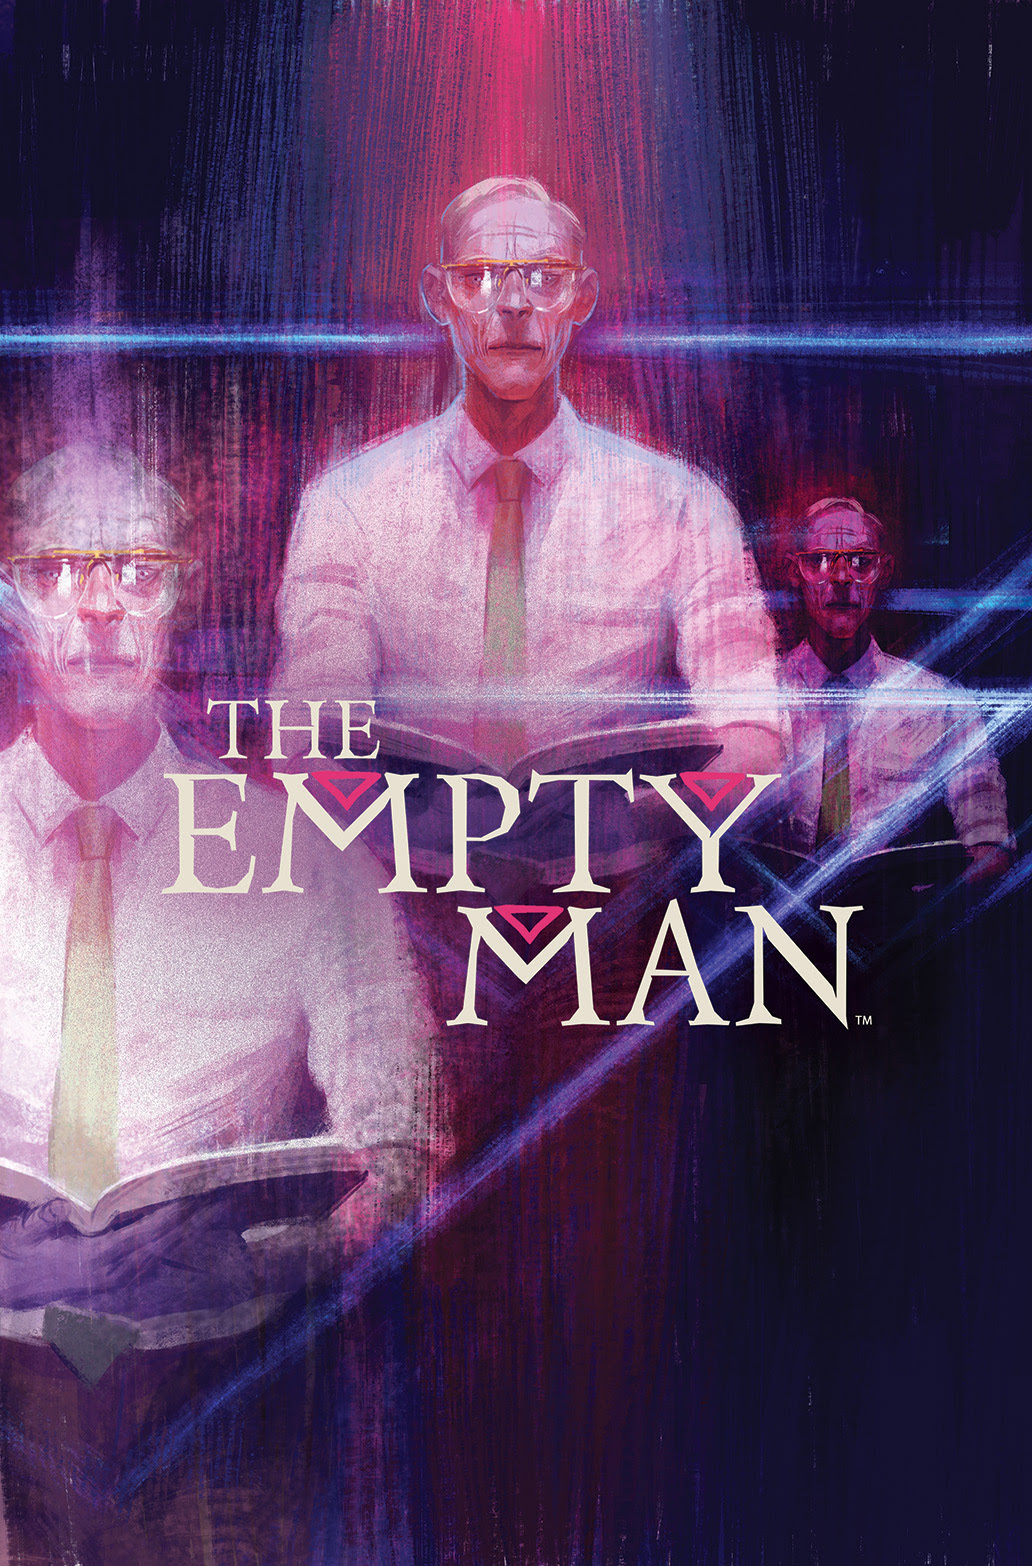 THE EMPTY MAN #4 Cover by Vanesa R. Del Rey